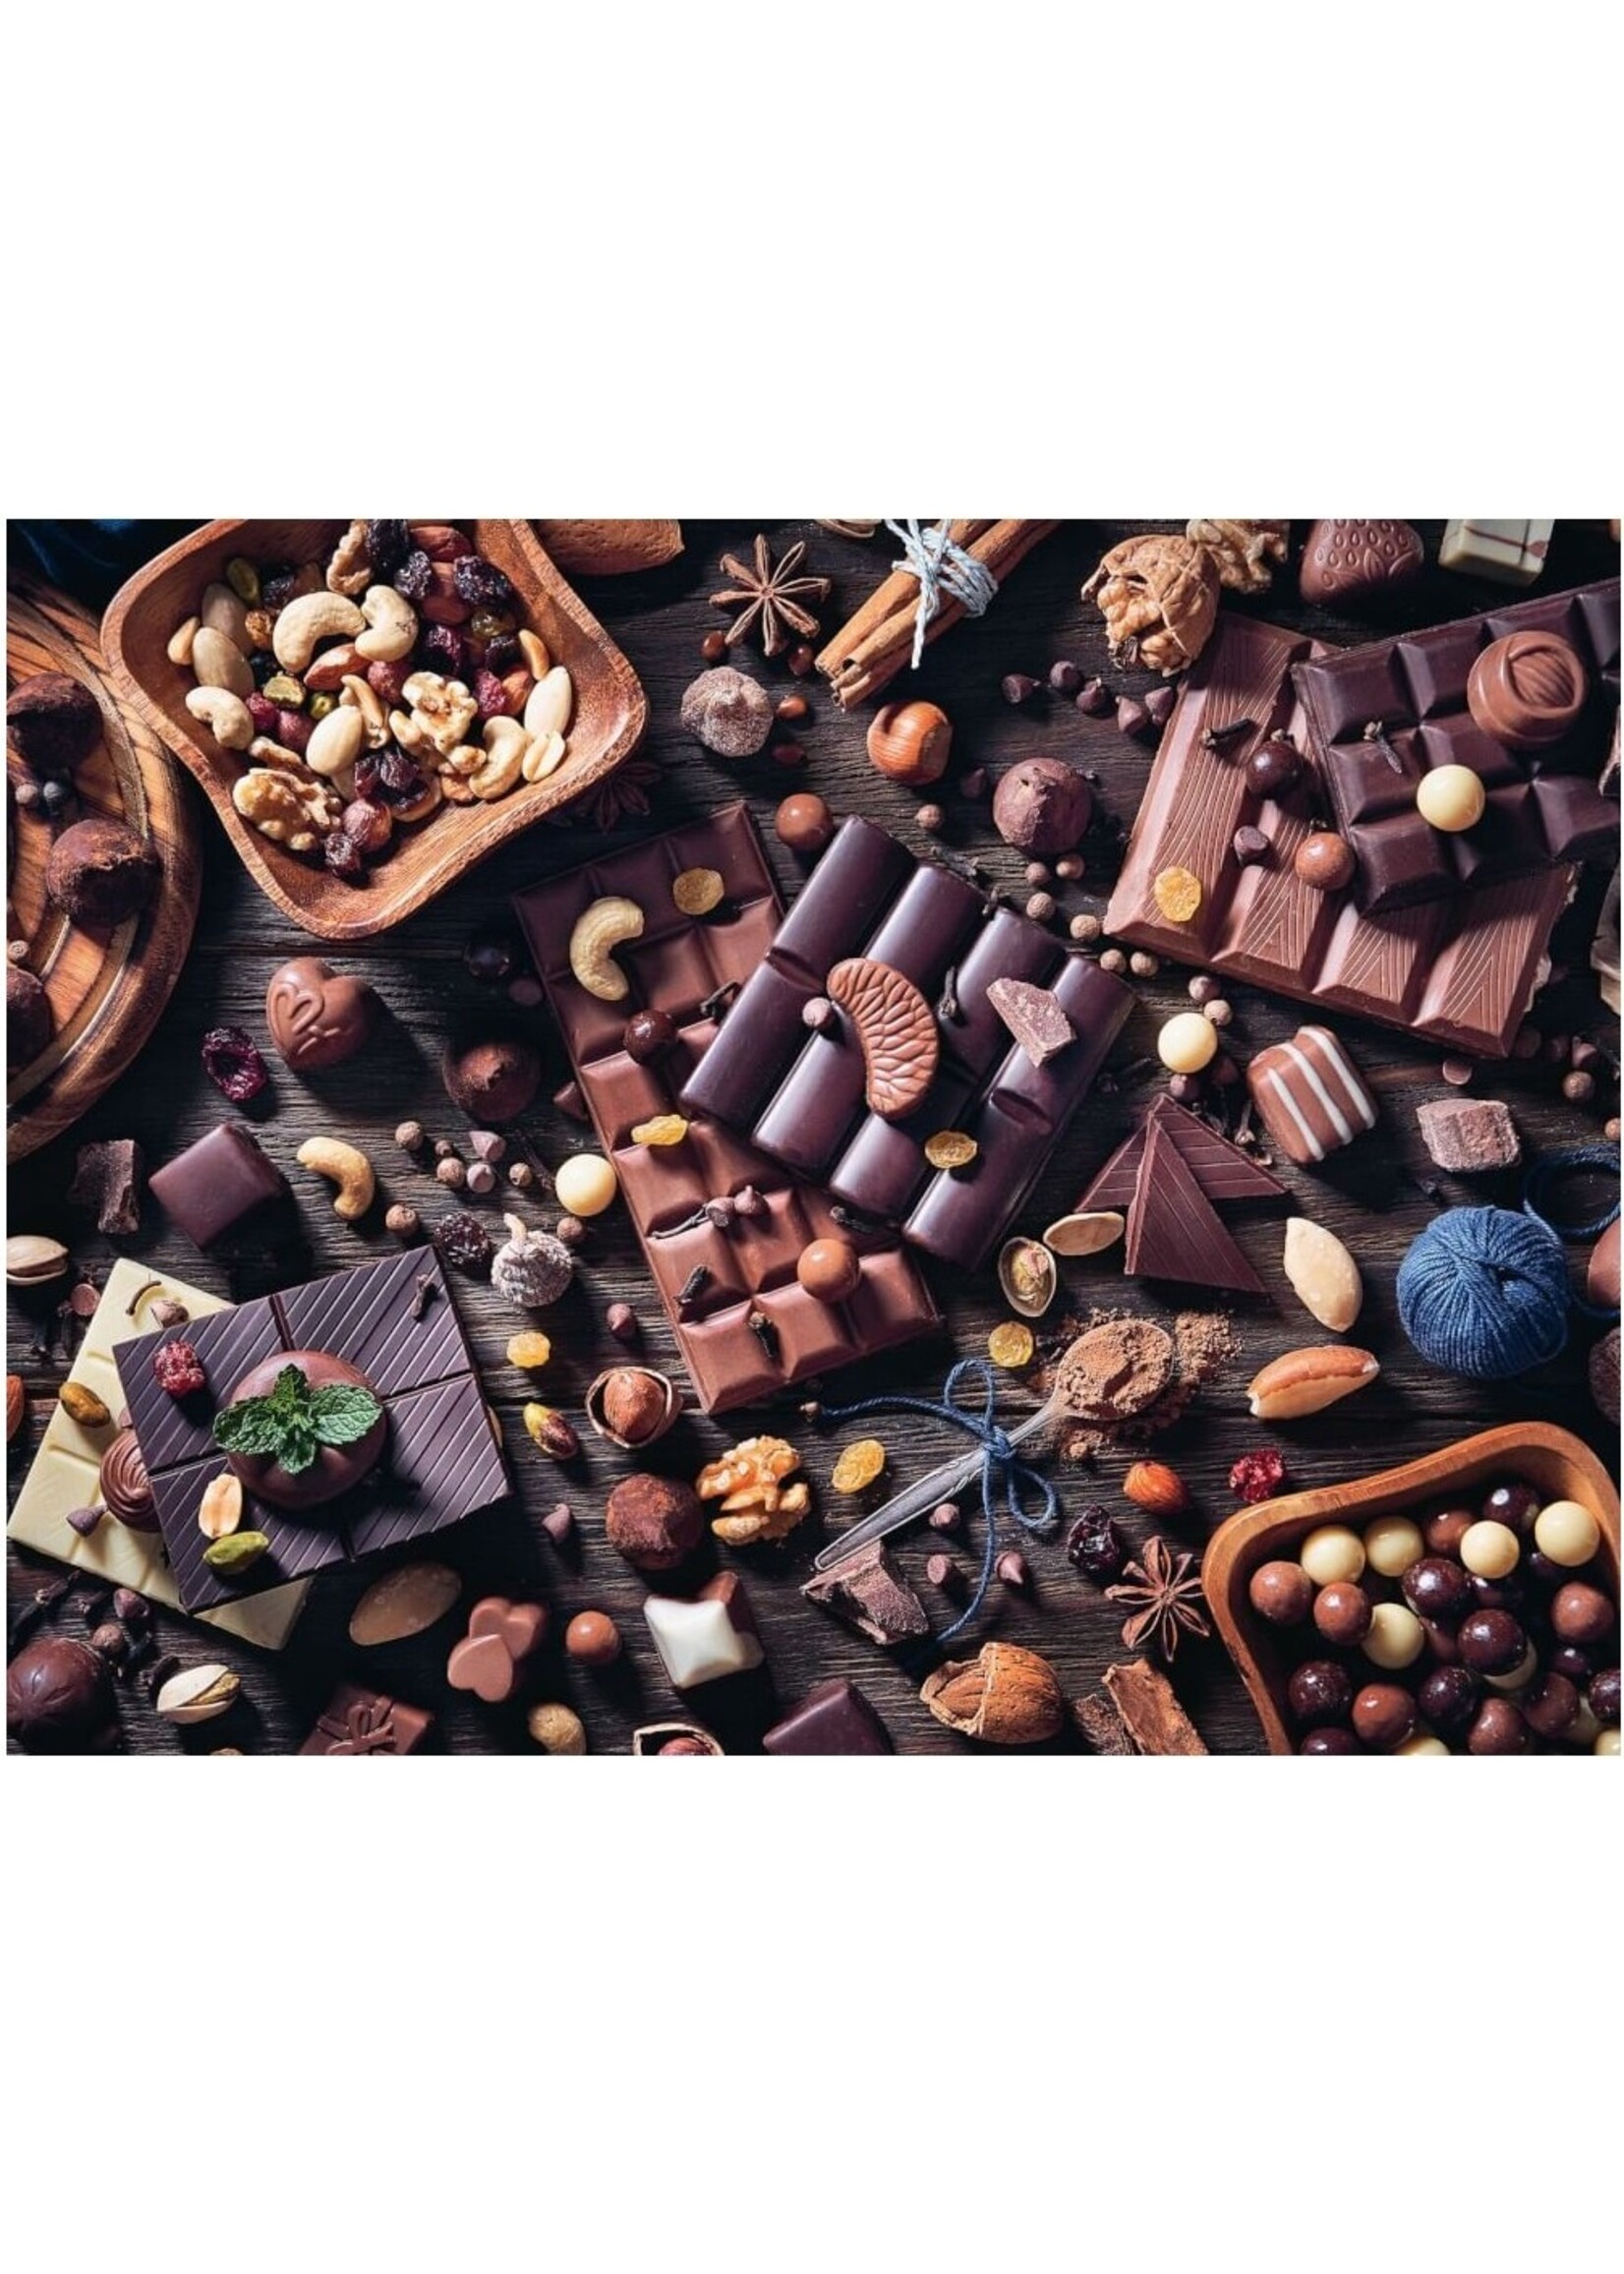 Ravensburger "Chocolate Paradise" 2000 Piece Puzzle